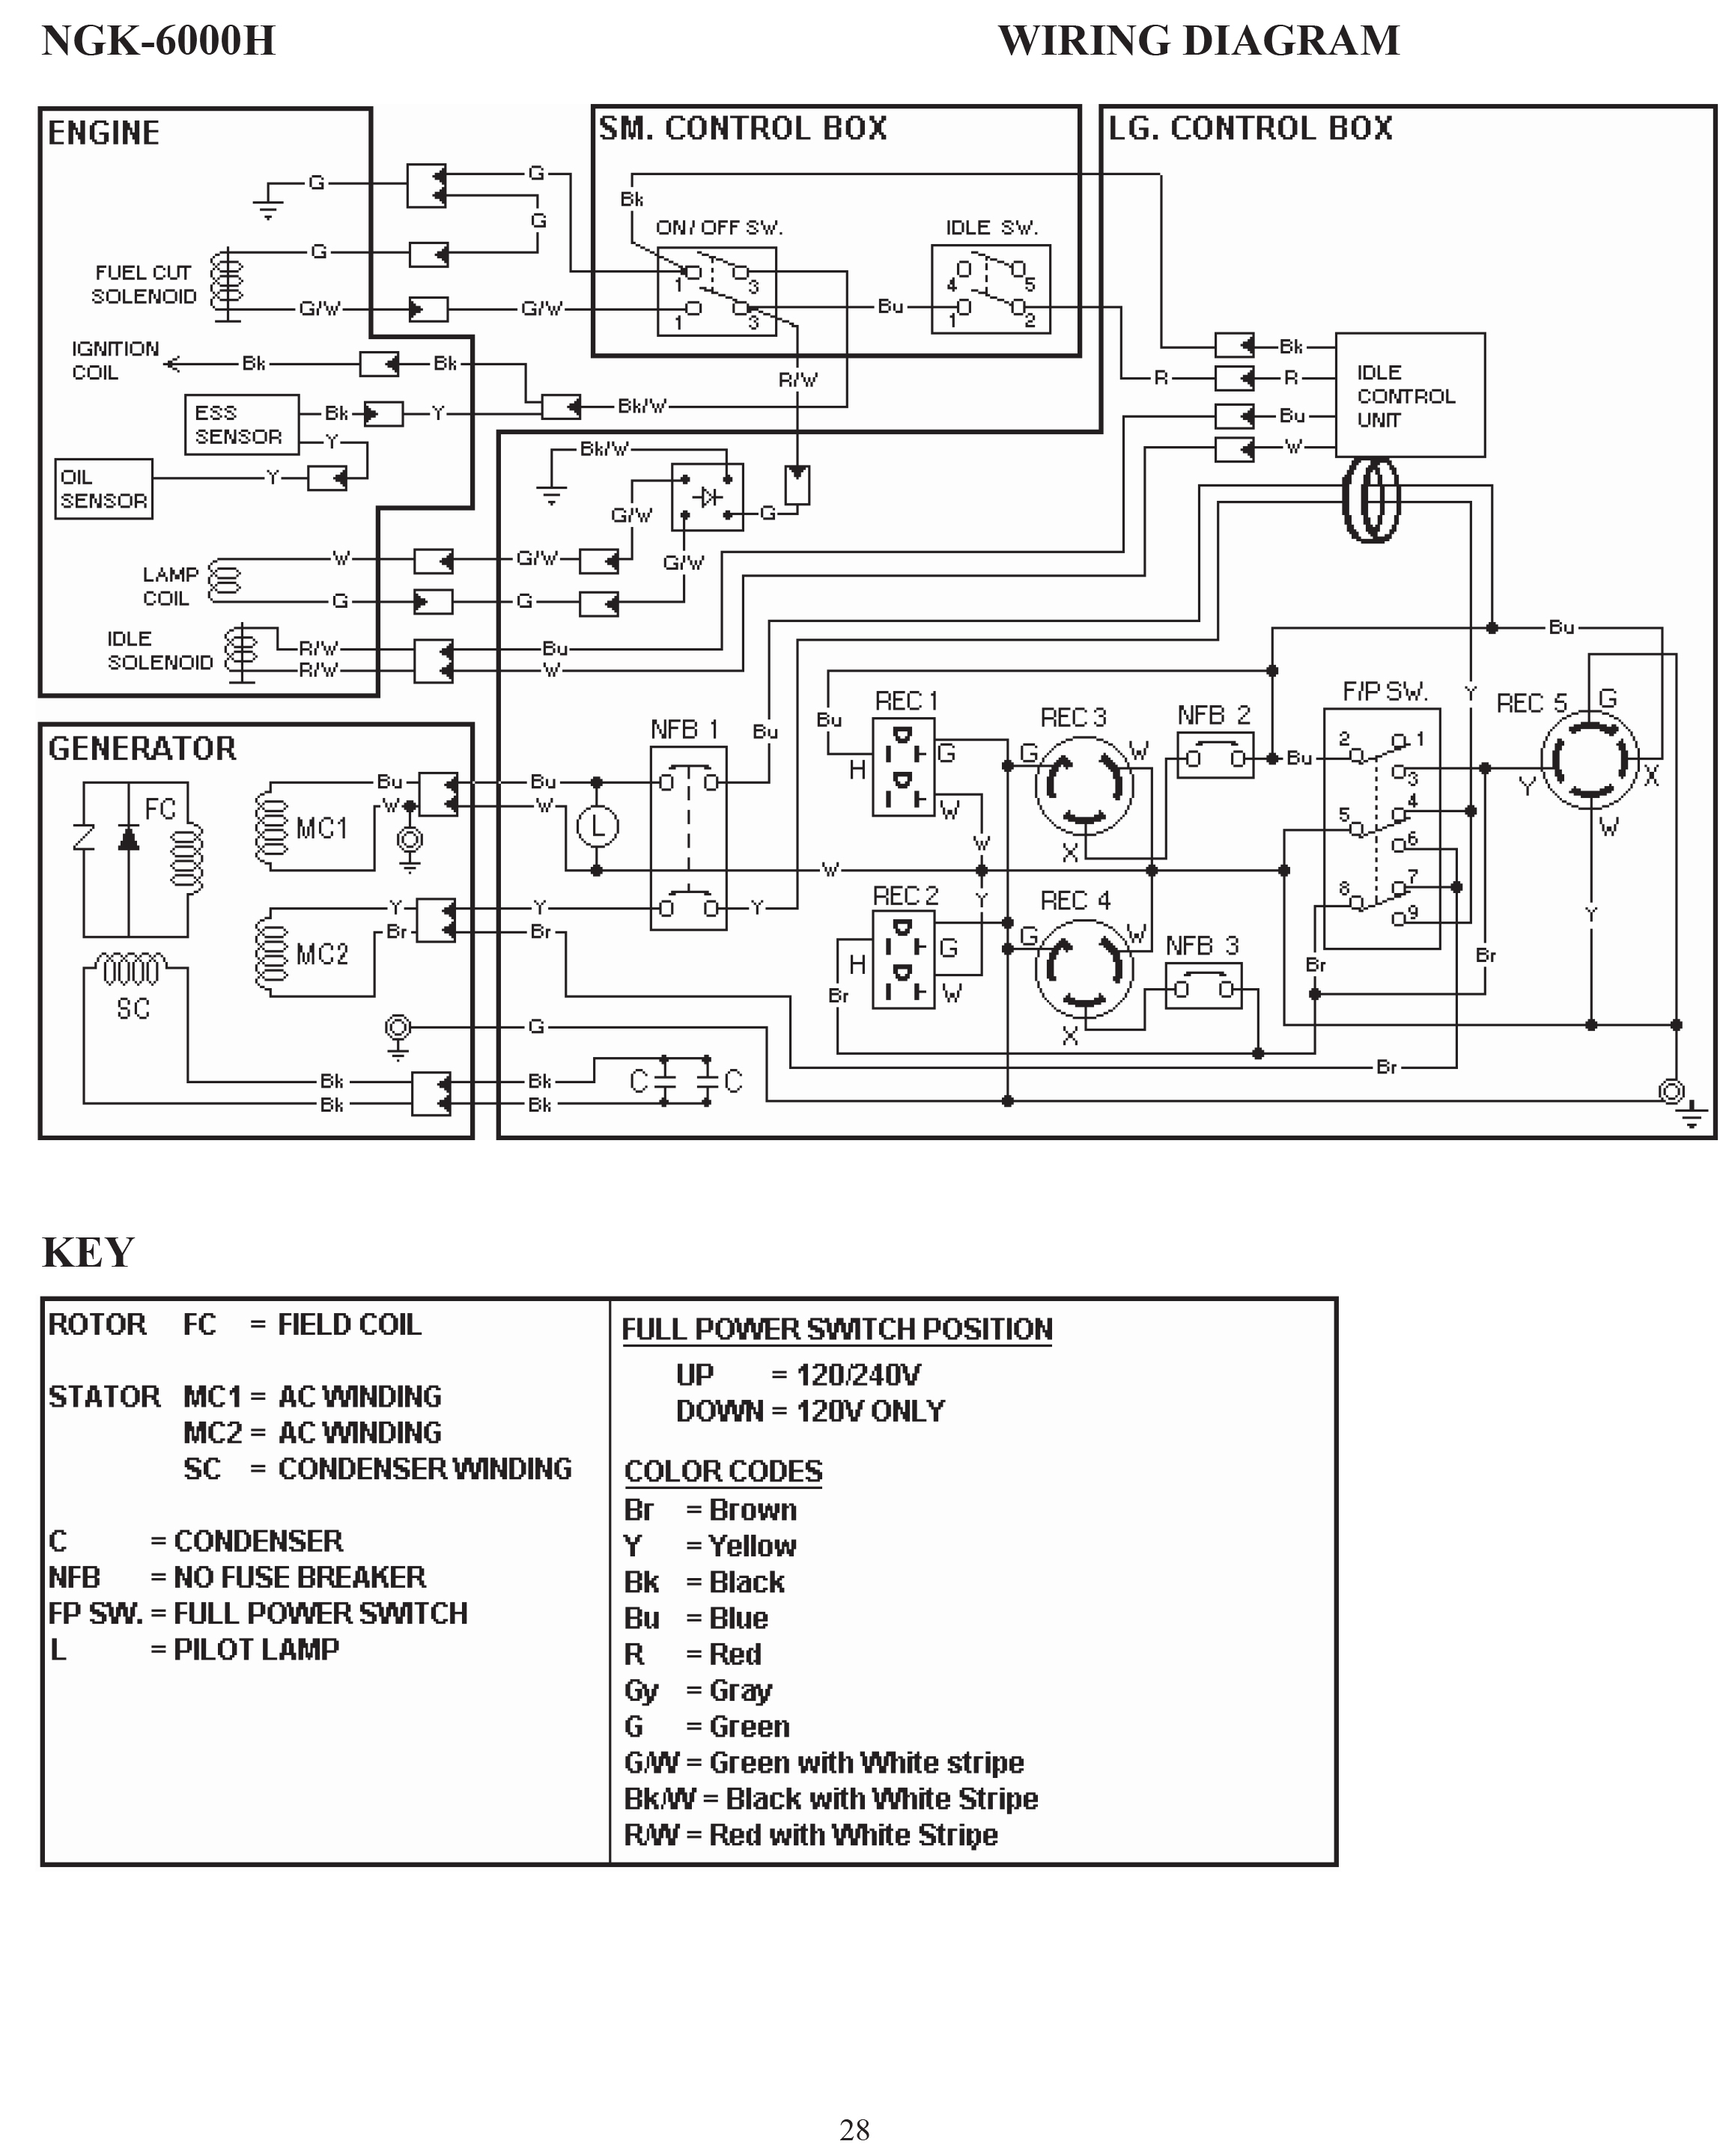 Winnebago Electrical Wiring Diagrams | Manual E-Books - Winnebago Wiring Diagram